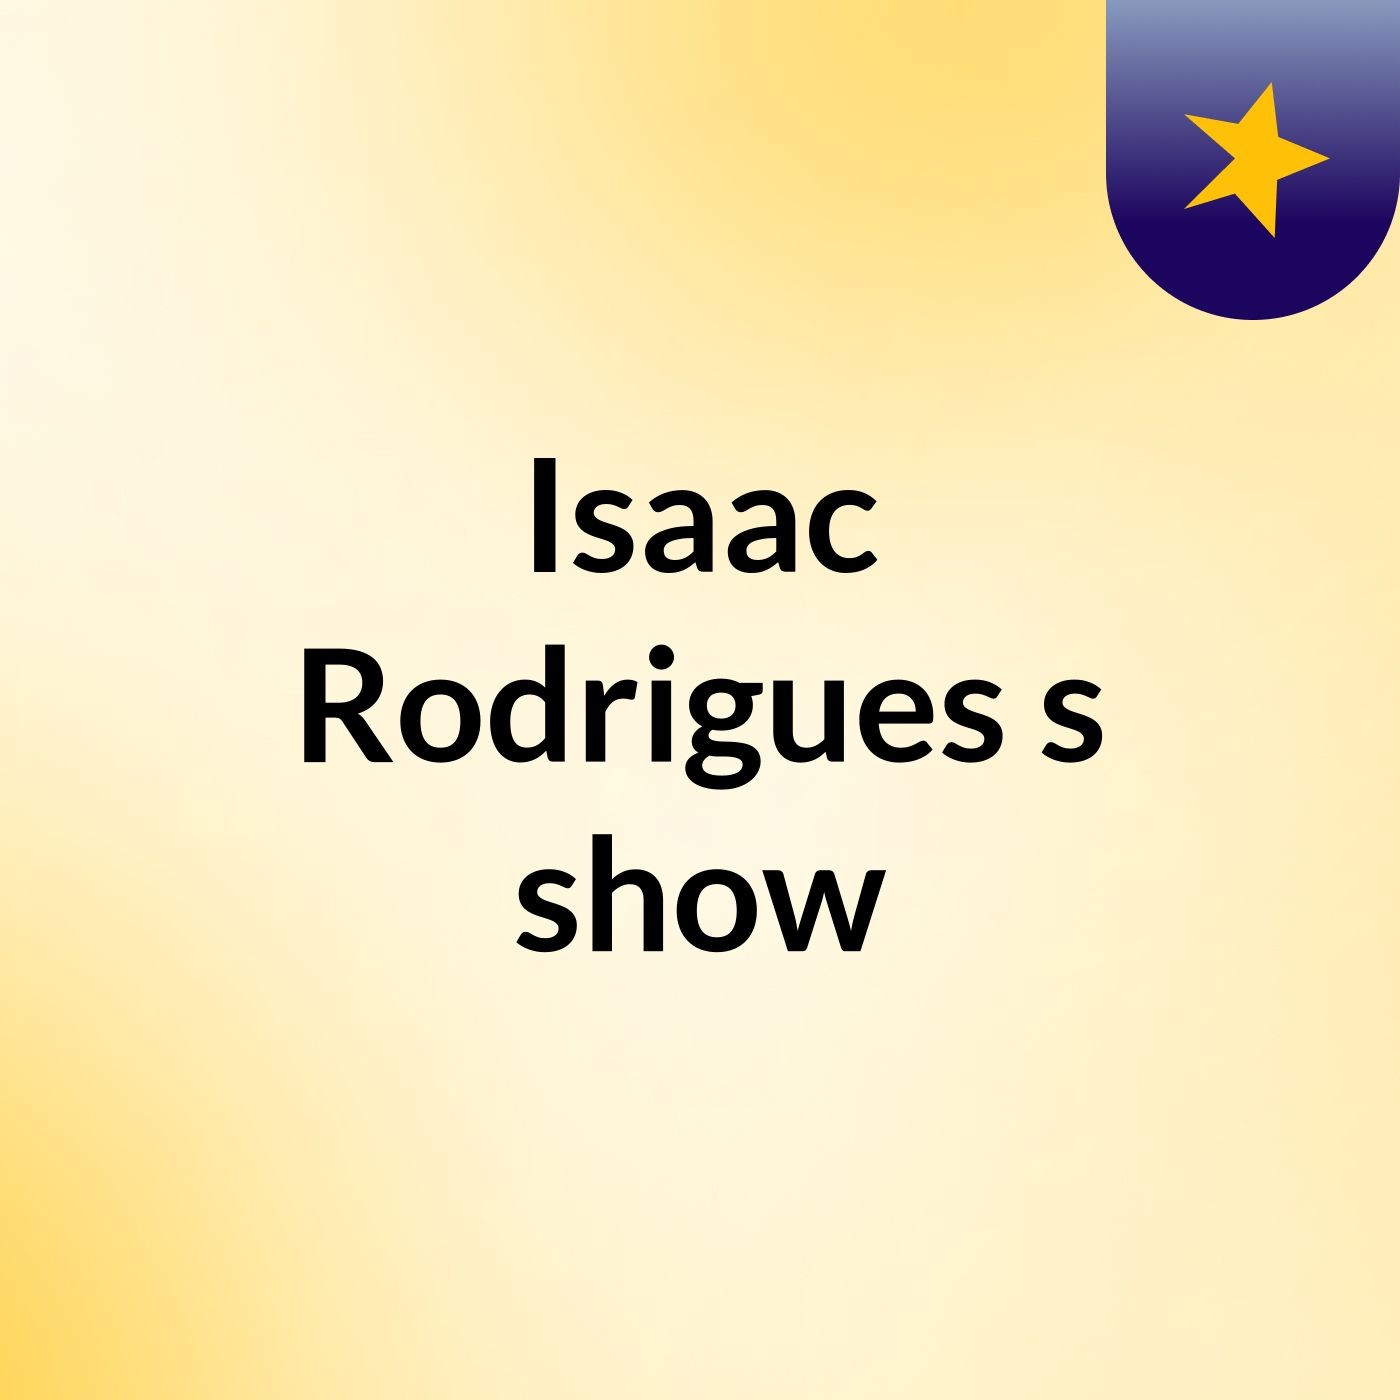 Isaac Rodrigues's show